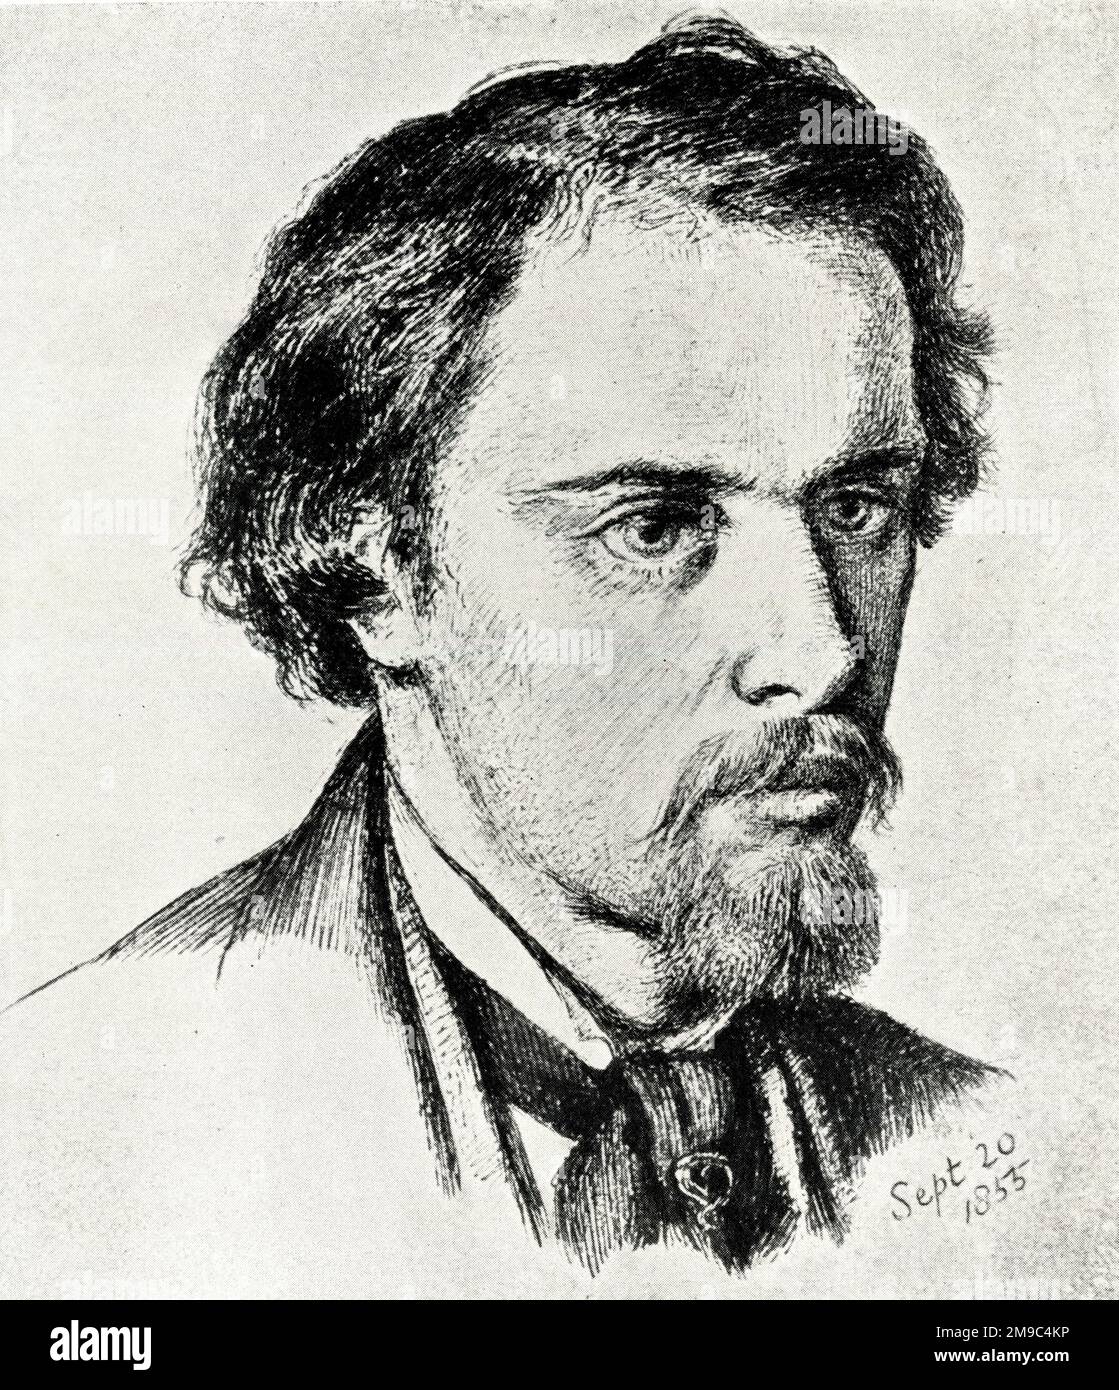 Dante Gabriel Rossetti, Pre-Raphaelite artist, self-portrait dated 20 September 1855 Stock Photo